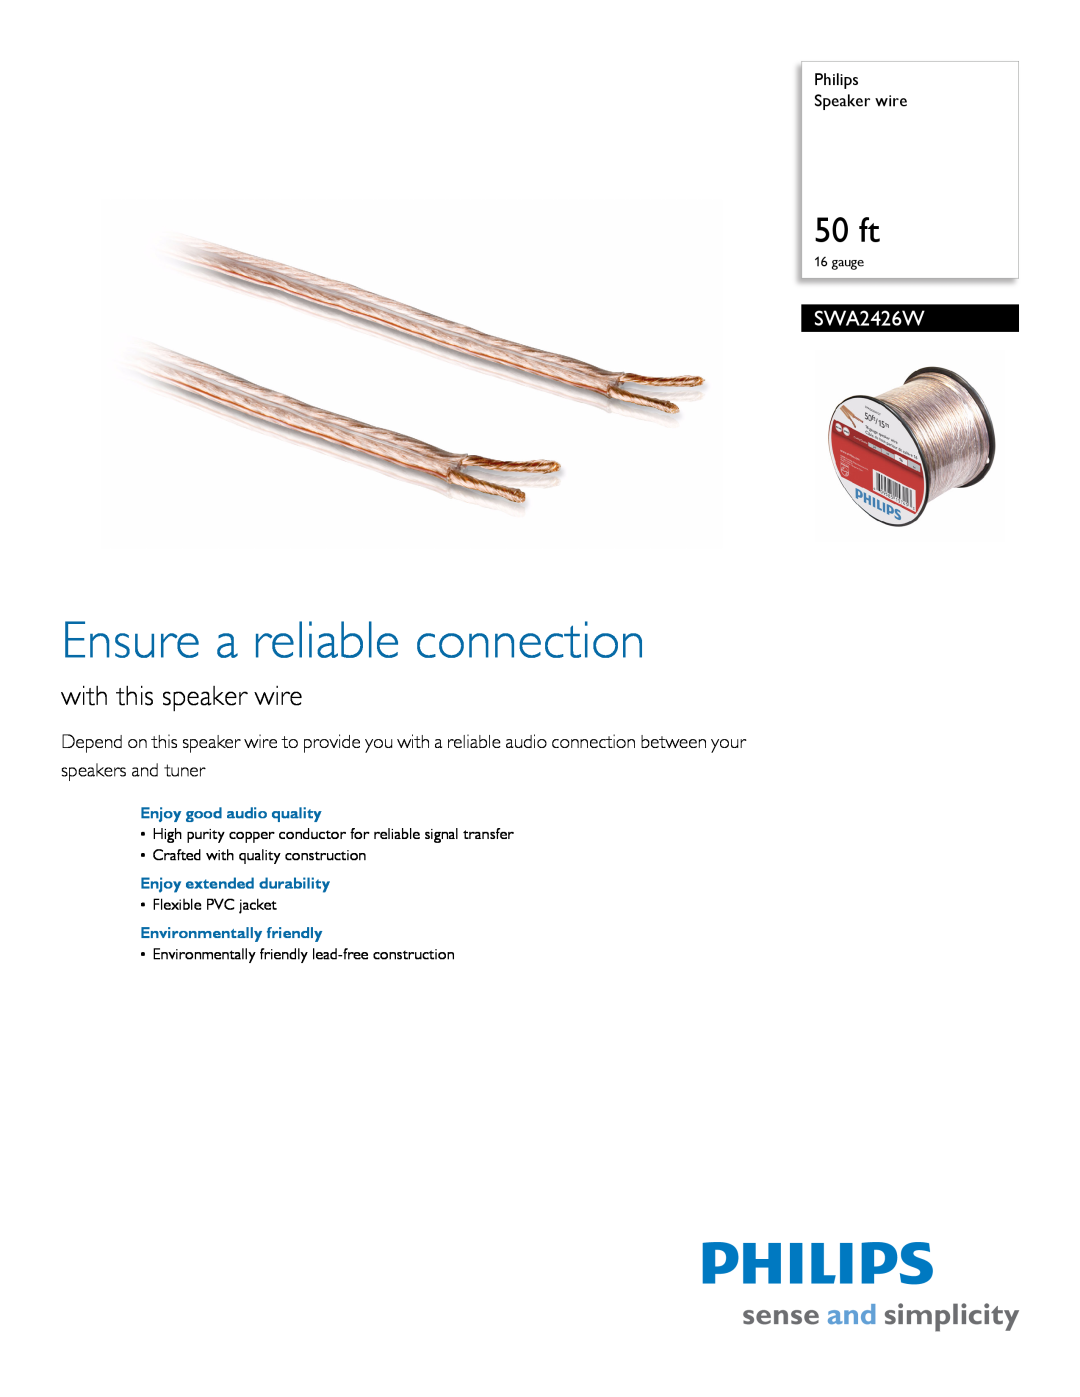 Philips SWA2426W manual Philips Speaker wire, Enjoy good audio quality, Enjoy extended durability, 50 ft 